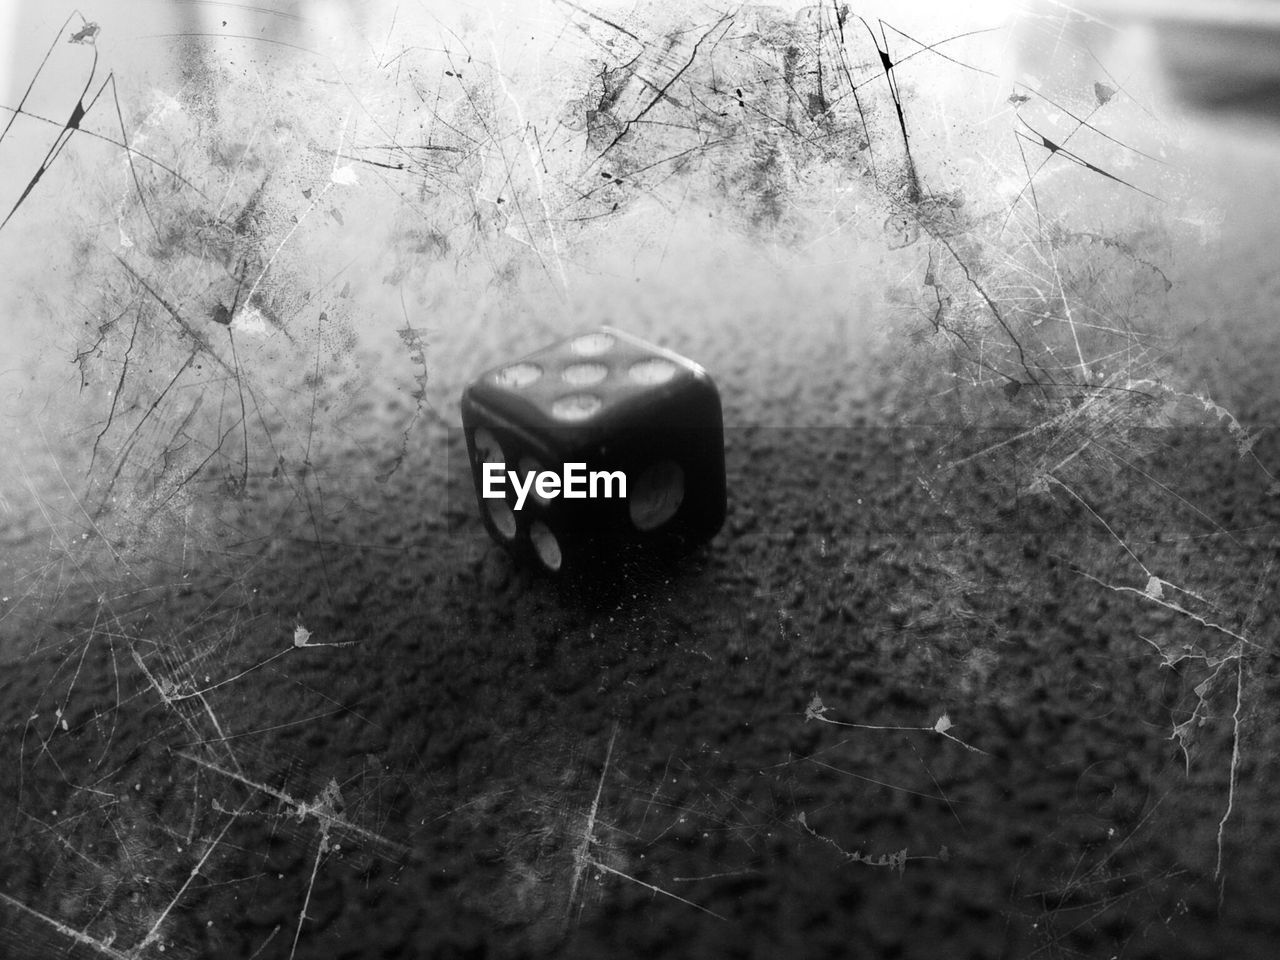 Close up of black dice